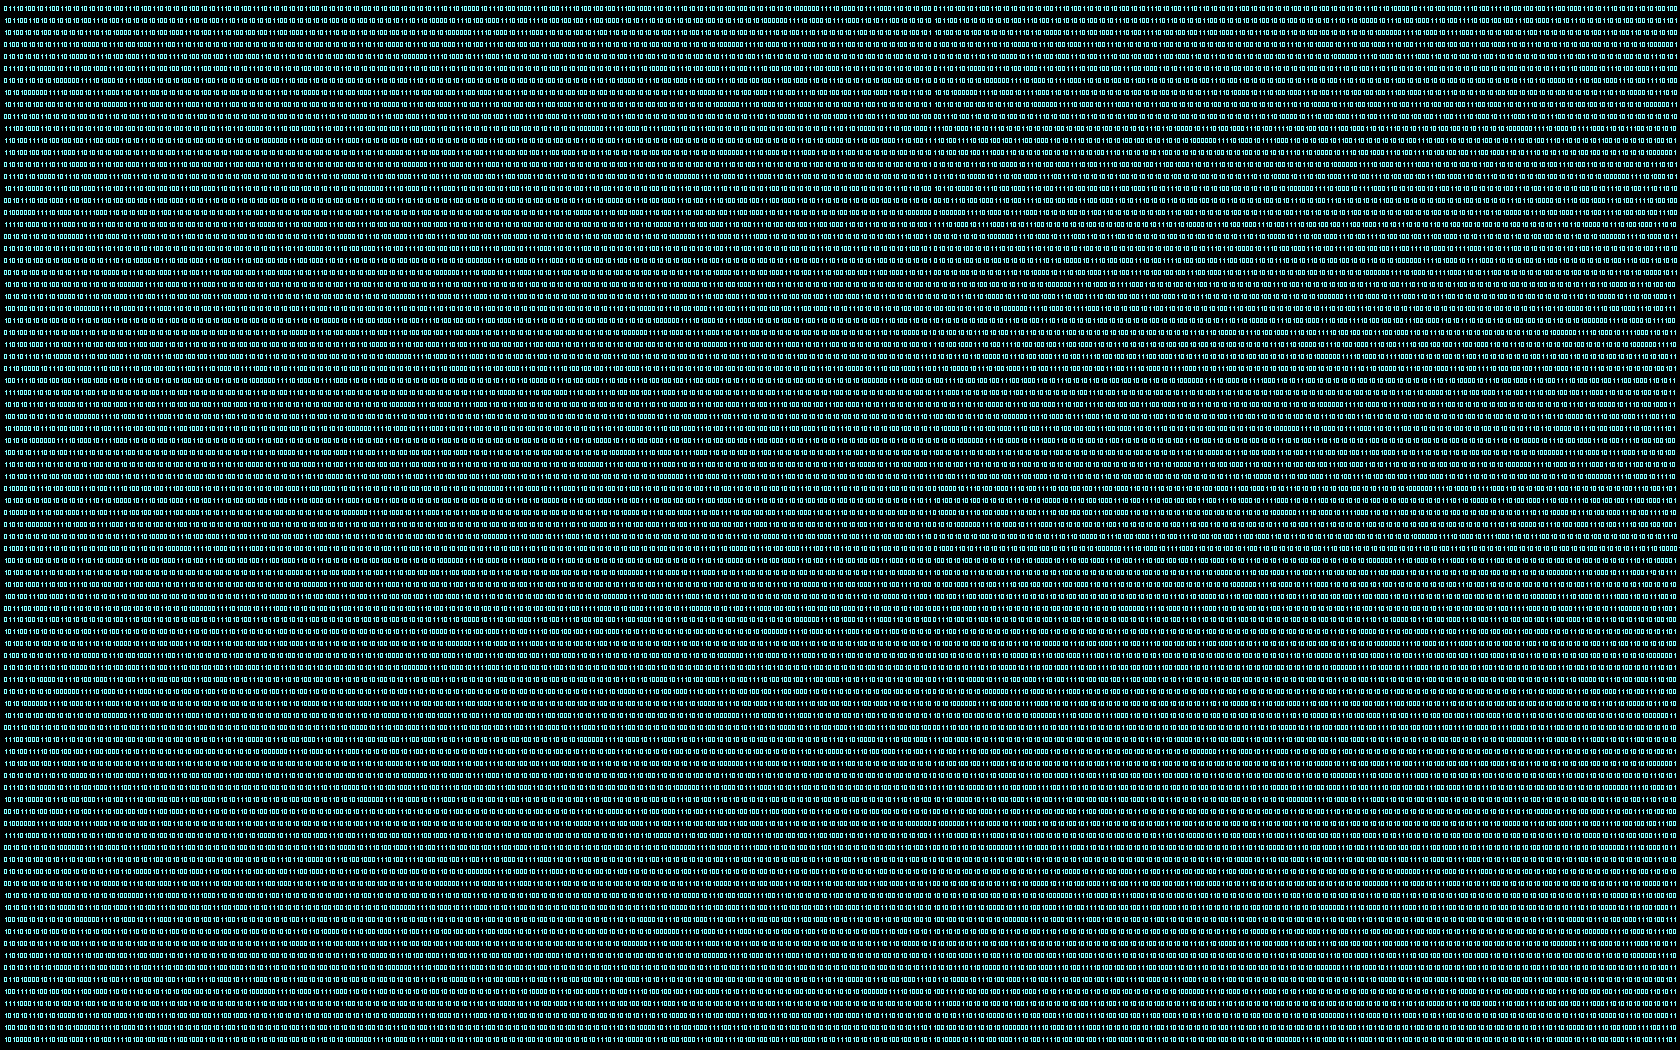 Binary Wallpaper, Picture, Image